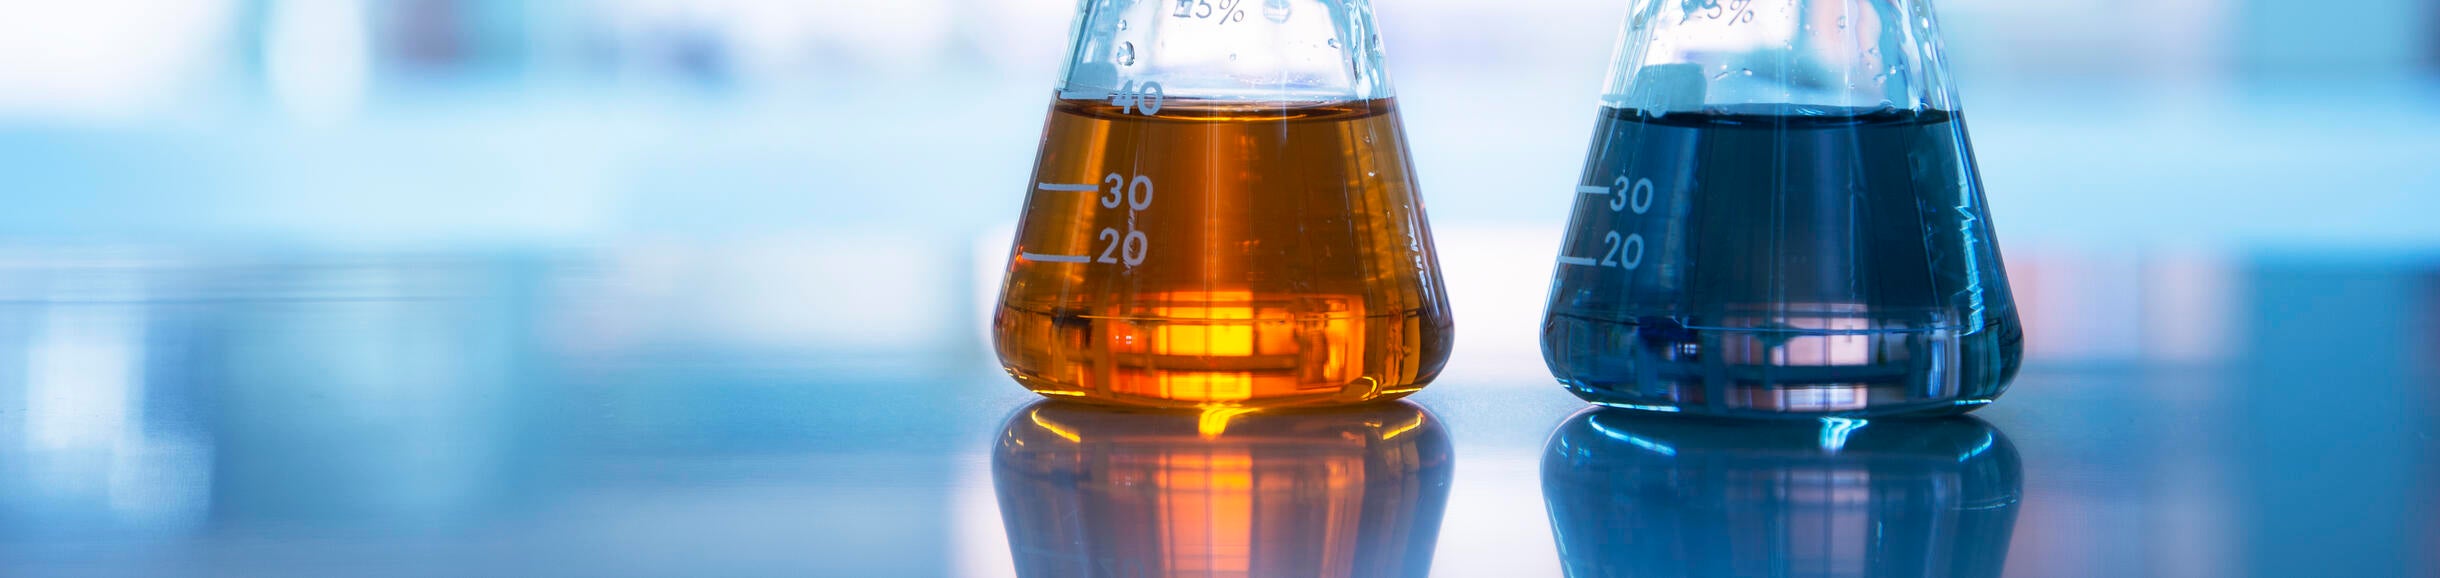 beakers of liquid chemicals on laboratory countertop